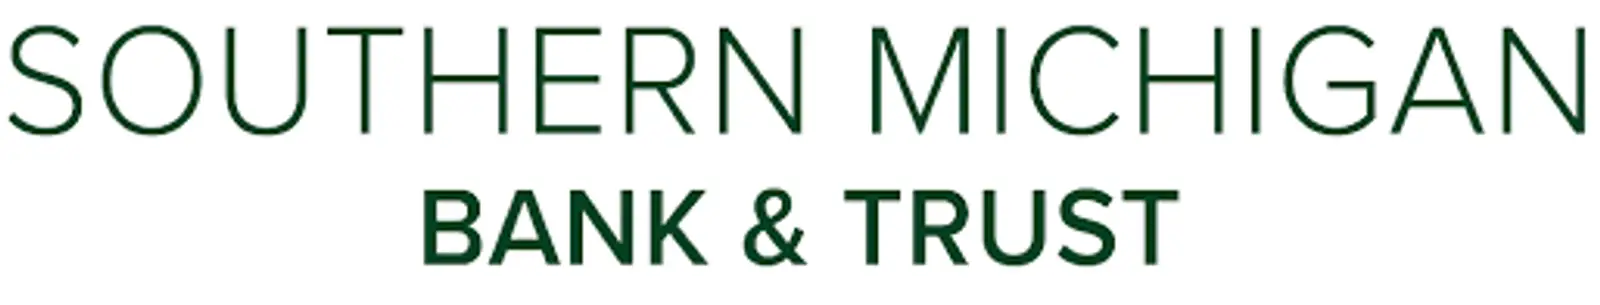 Southern Michigan Bank & Trust  logo